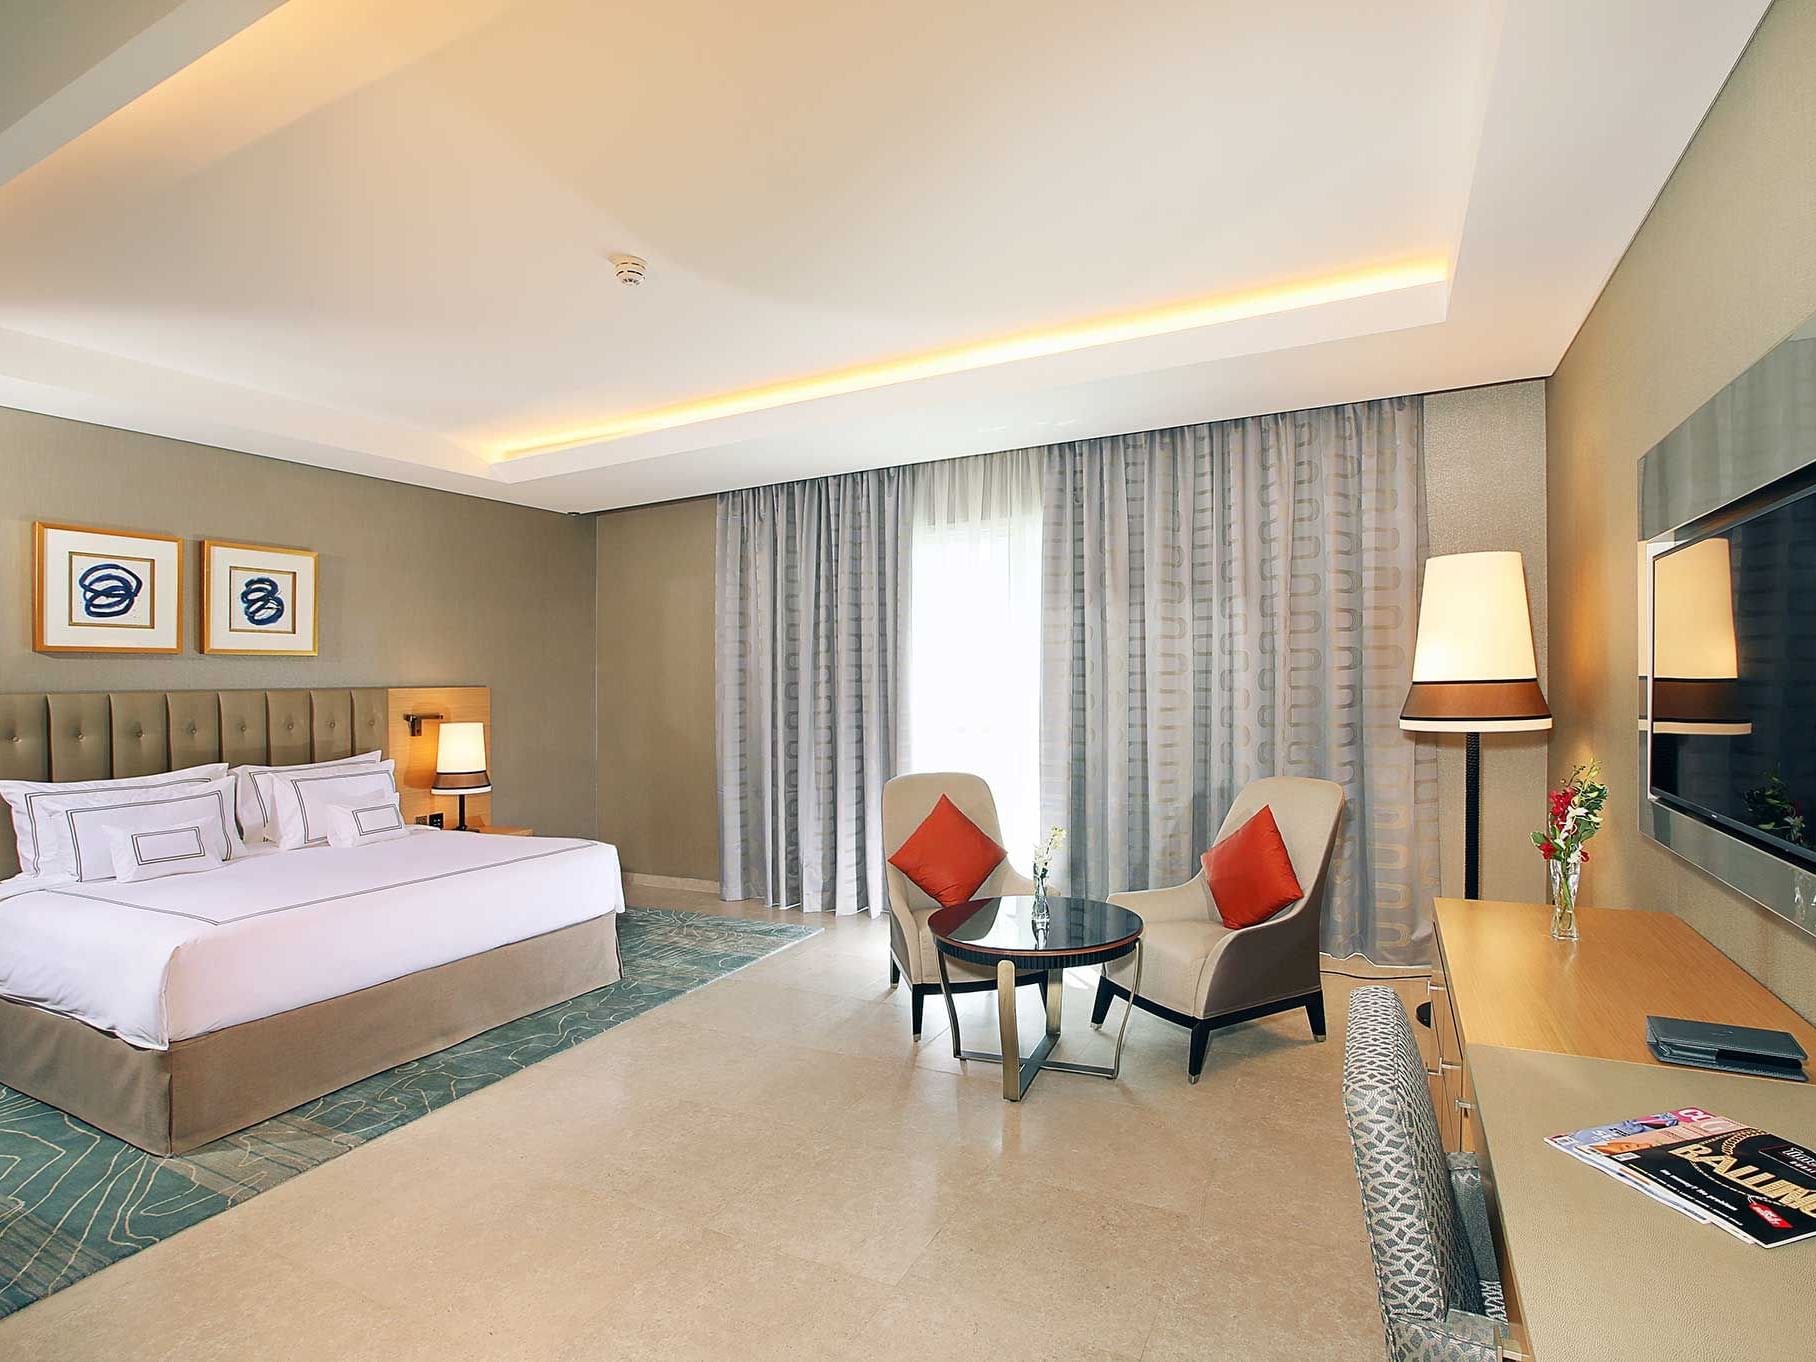 Premium Room at Grand Cosmopolitan Hotel in Dubai